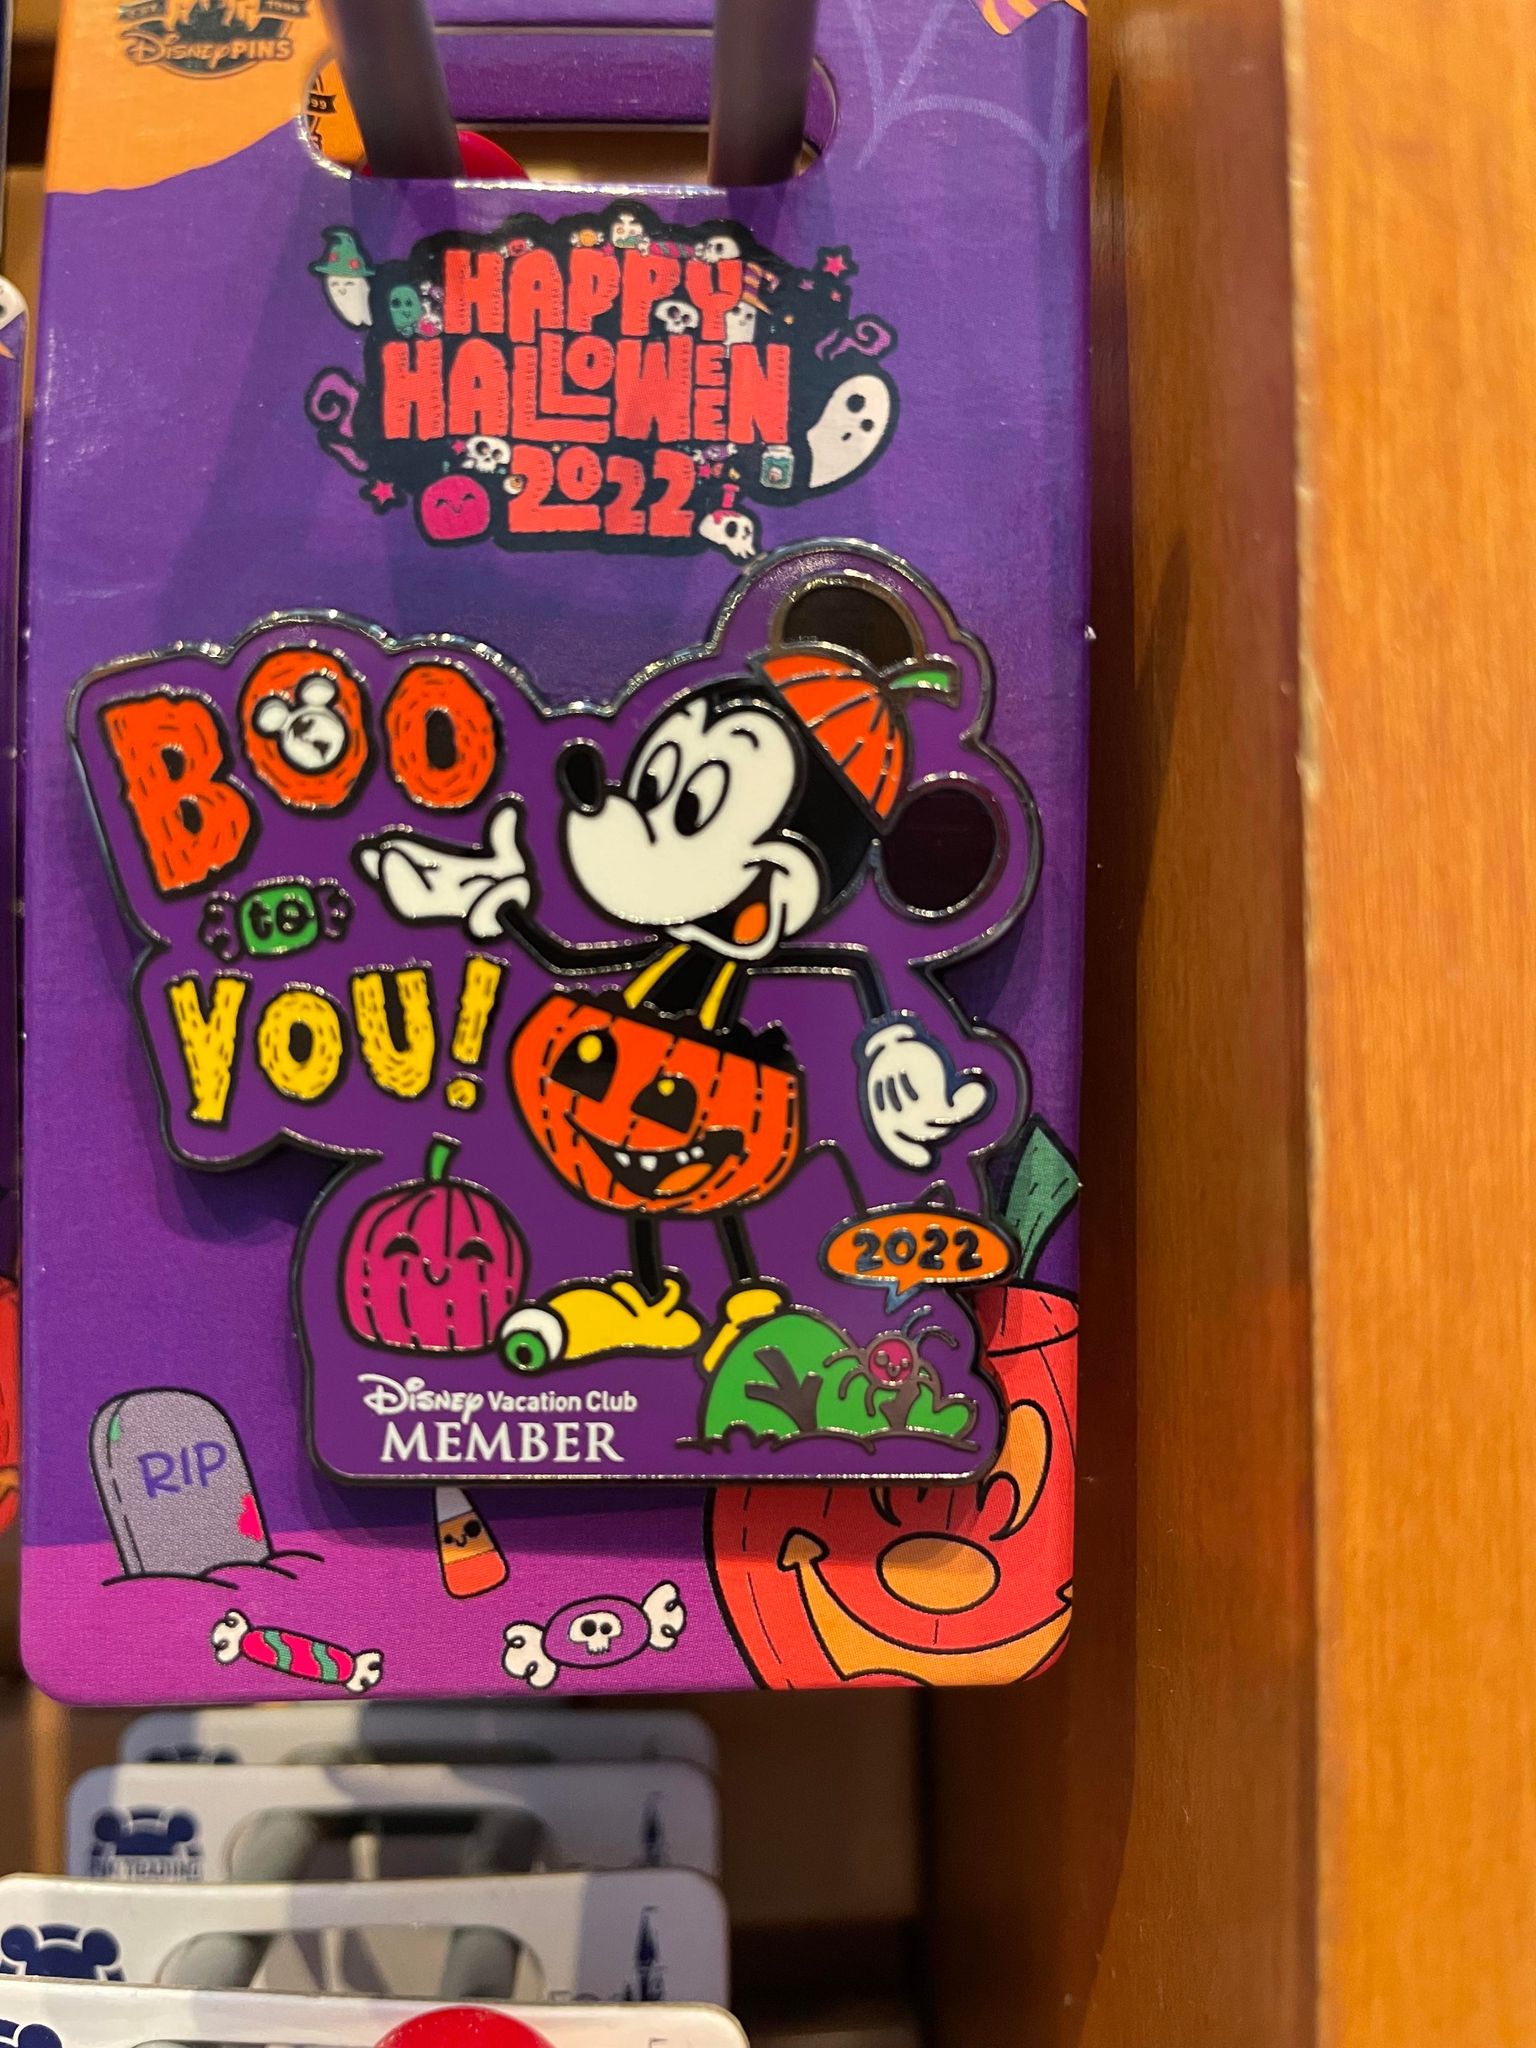 New DVC Halloween Pin Pops Up at Walt Disney World